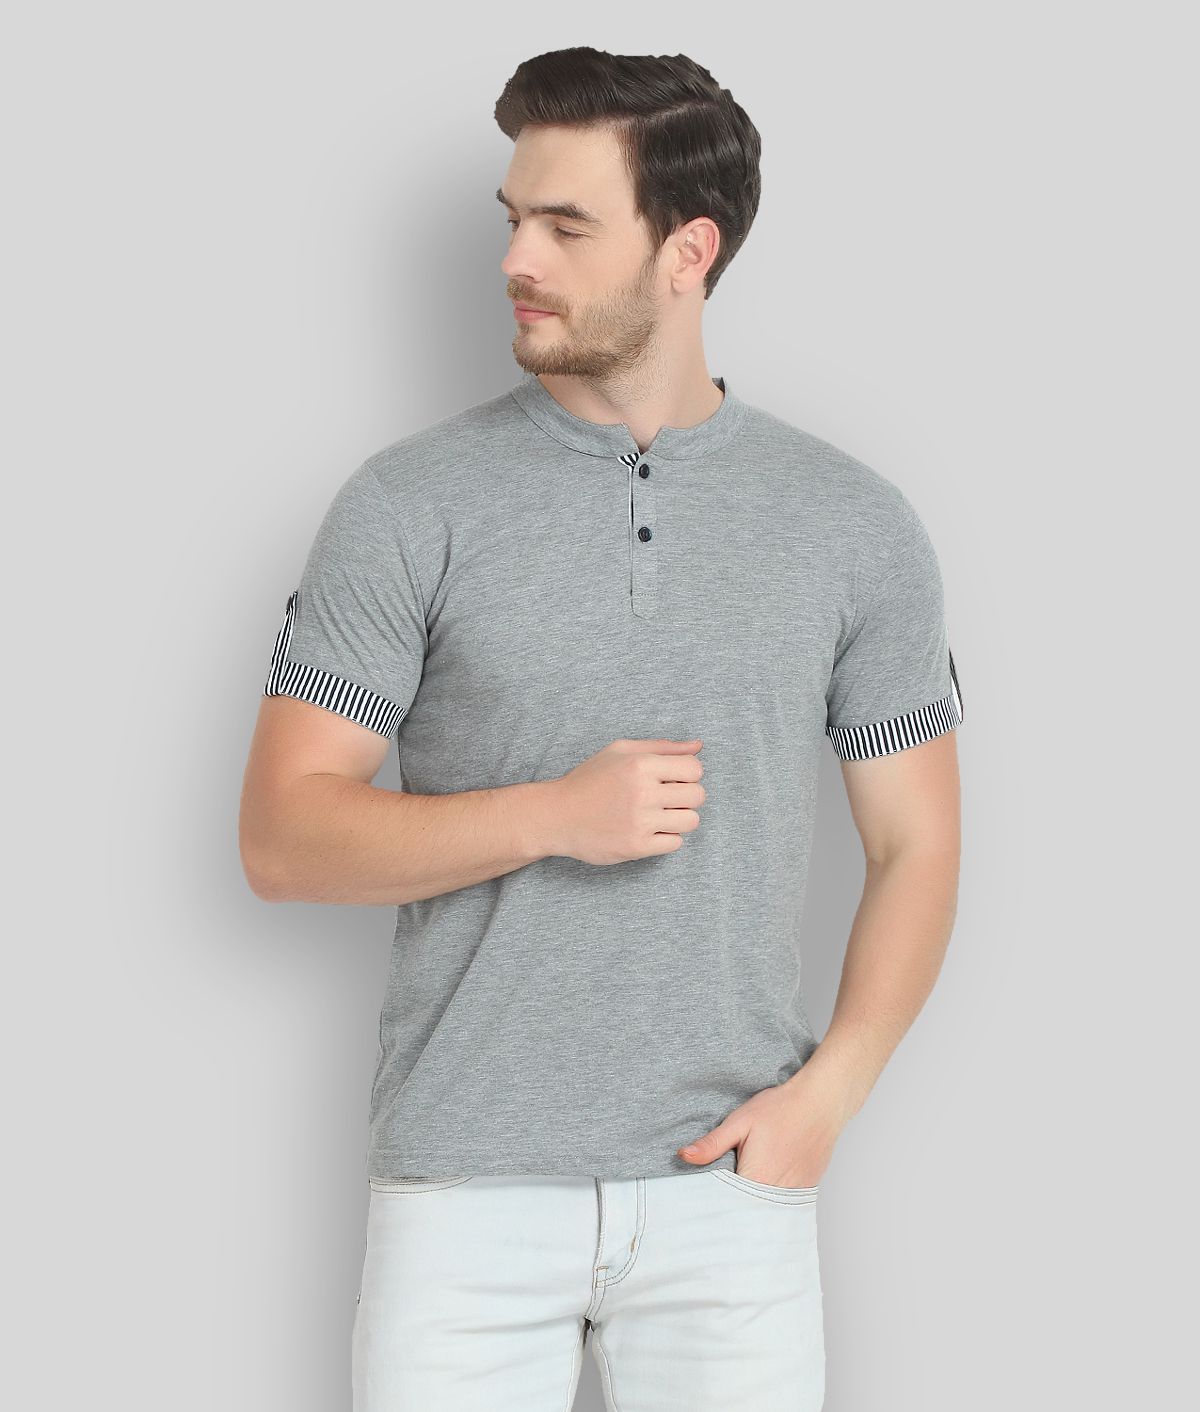     			Glito - Grey Cotton Blend Regular Fit Men's T-Shirt ( Pack of 1 )